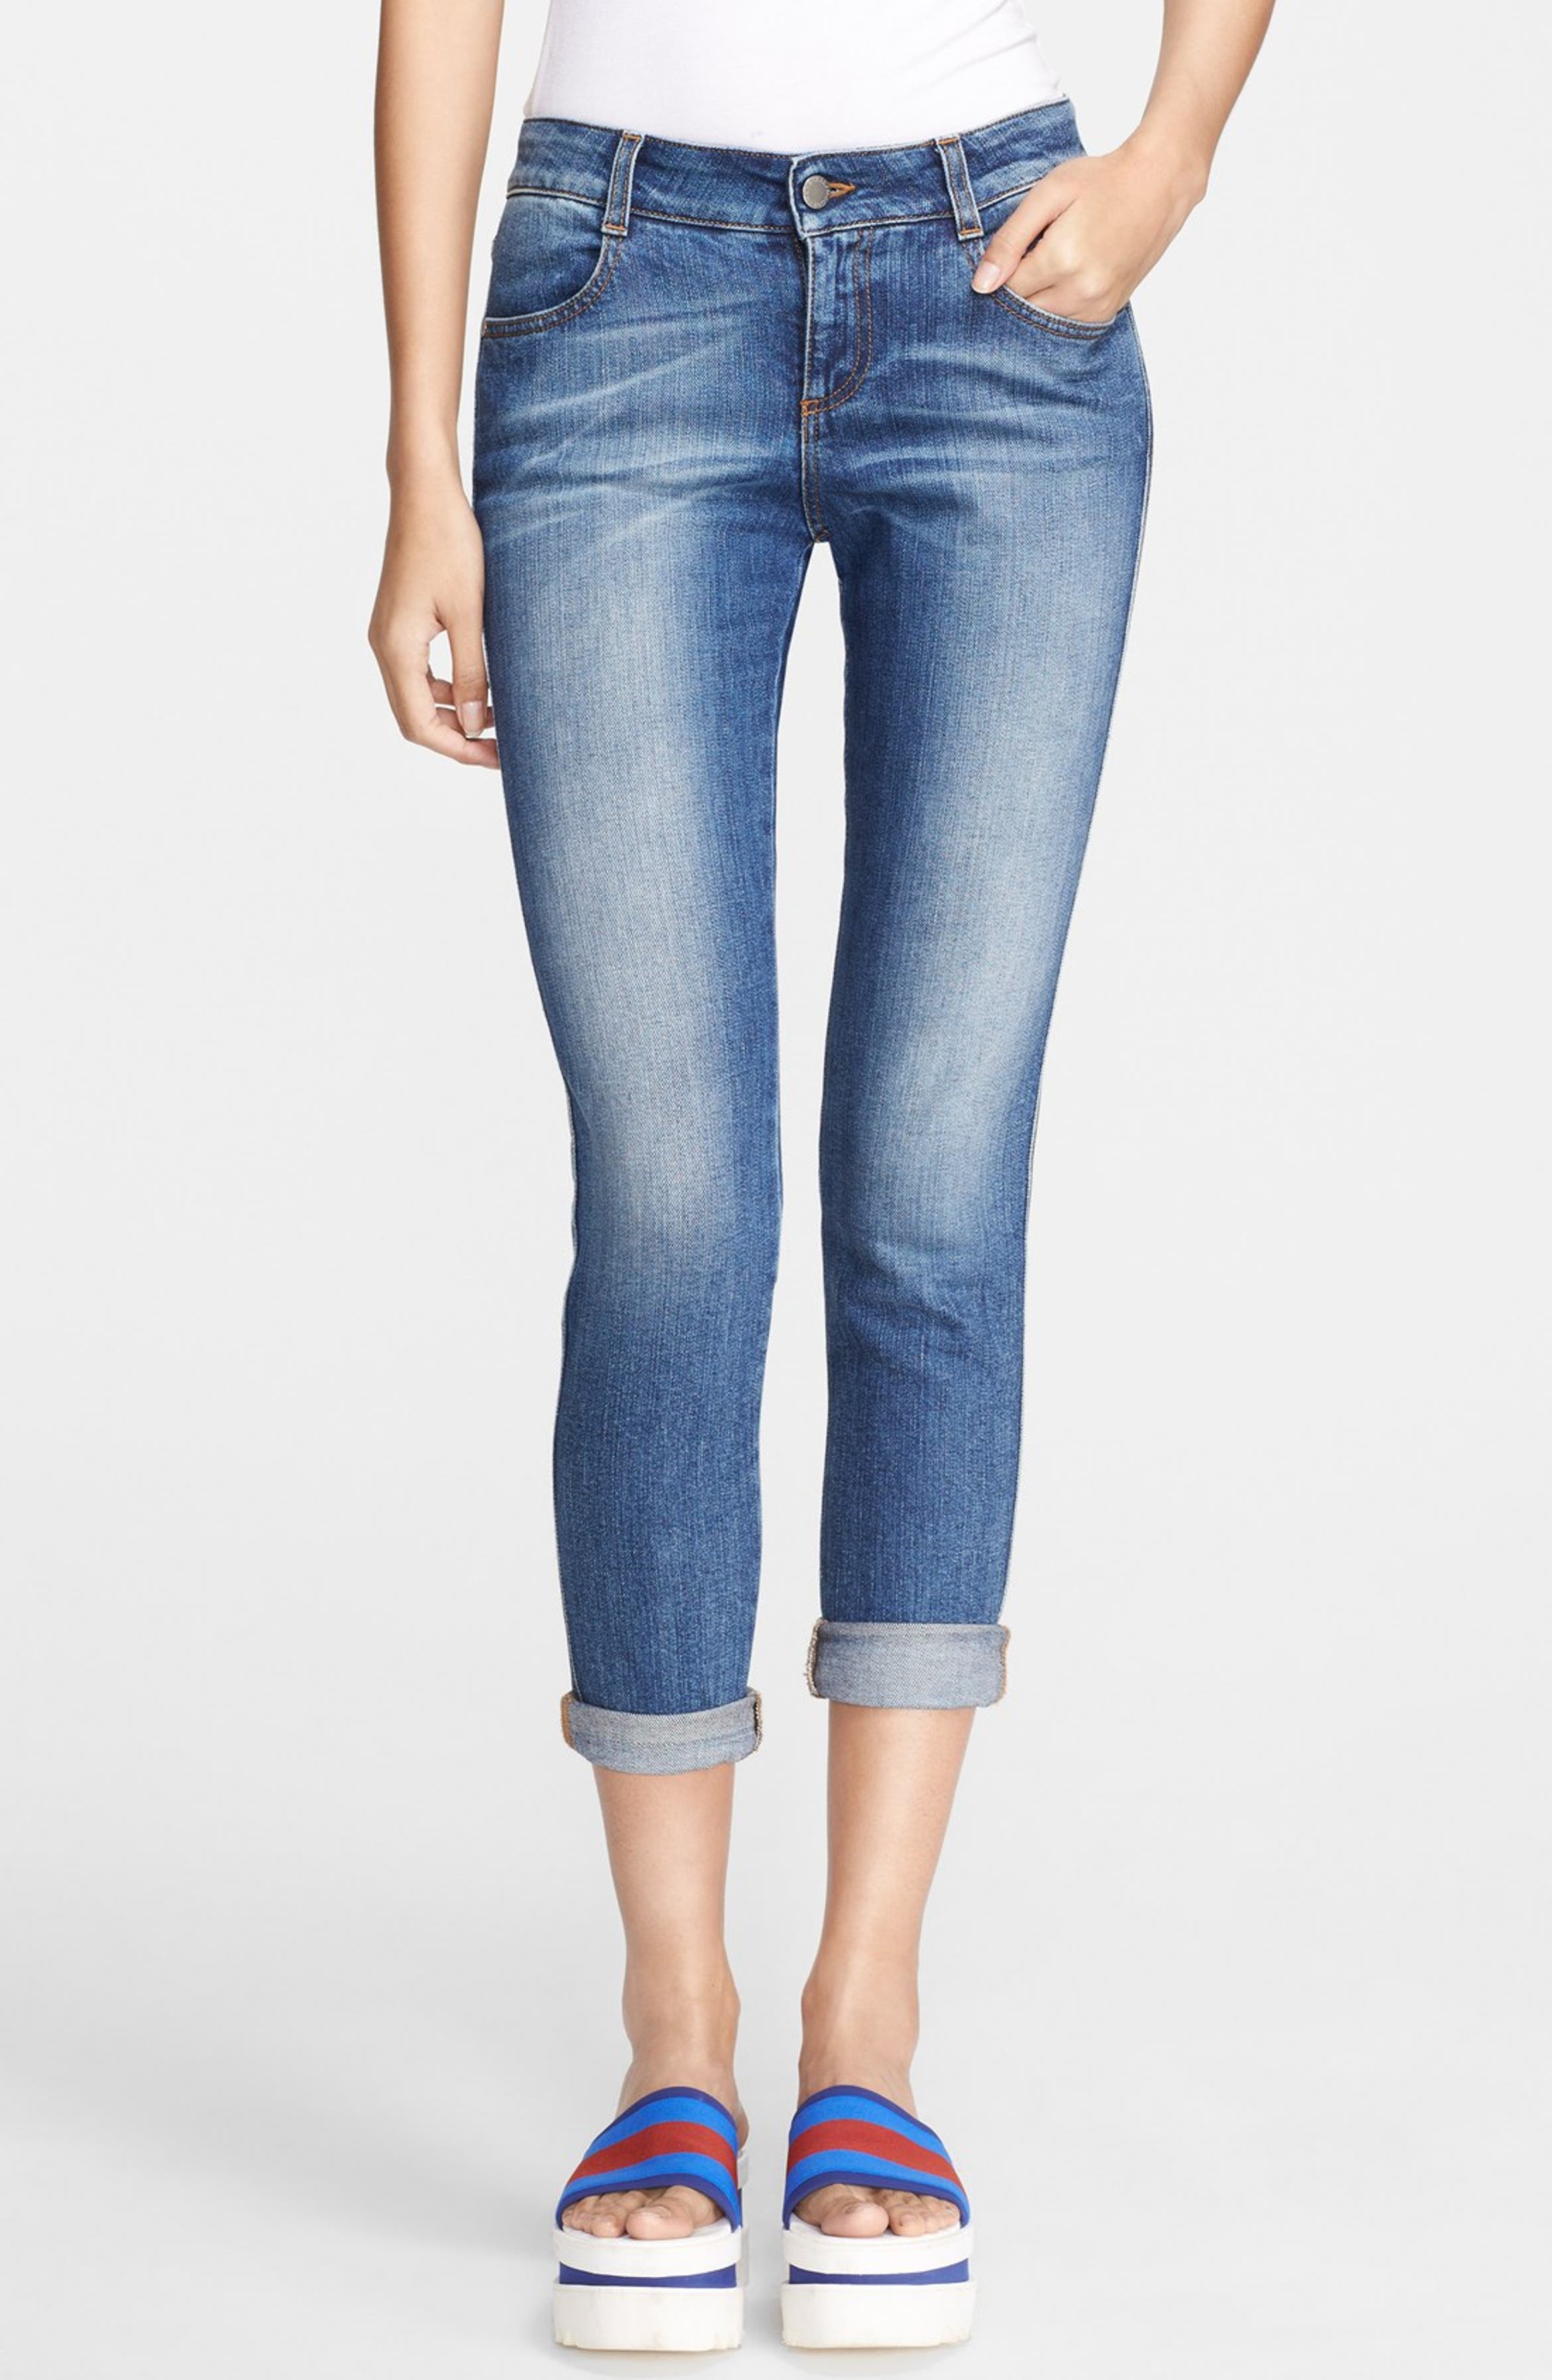 Stella McCartney Skinny Ankle Grazer Jeans | Nordstrom